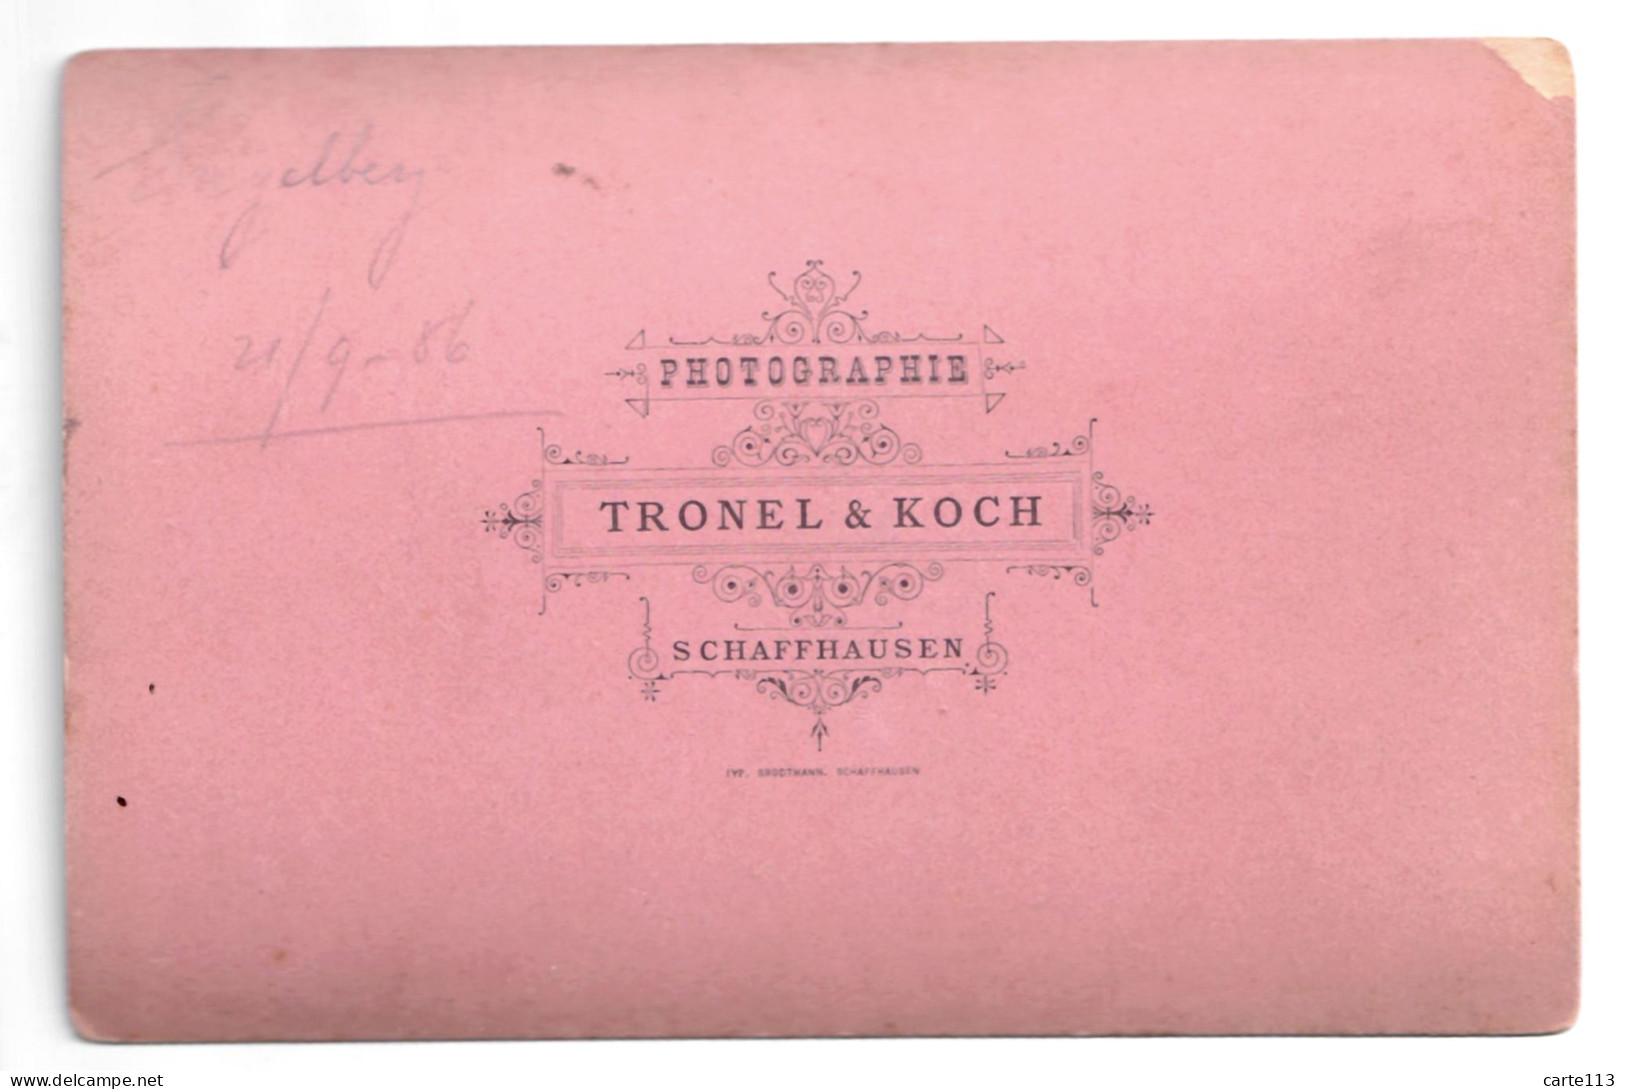 ANONYME - PHOTOGRAPHIE TIRAGE ALBUMINE - TRONEL ET KOCH - ENGELBERG - SUISSE - - 1801-1900